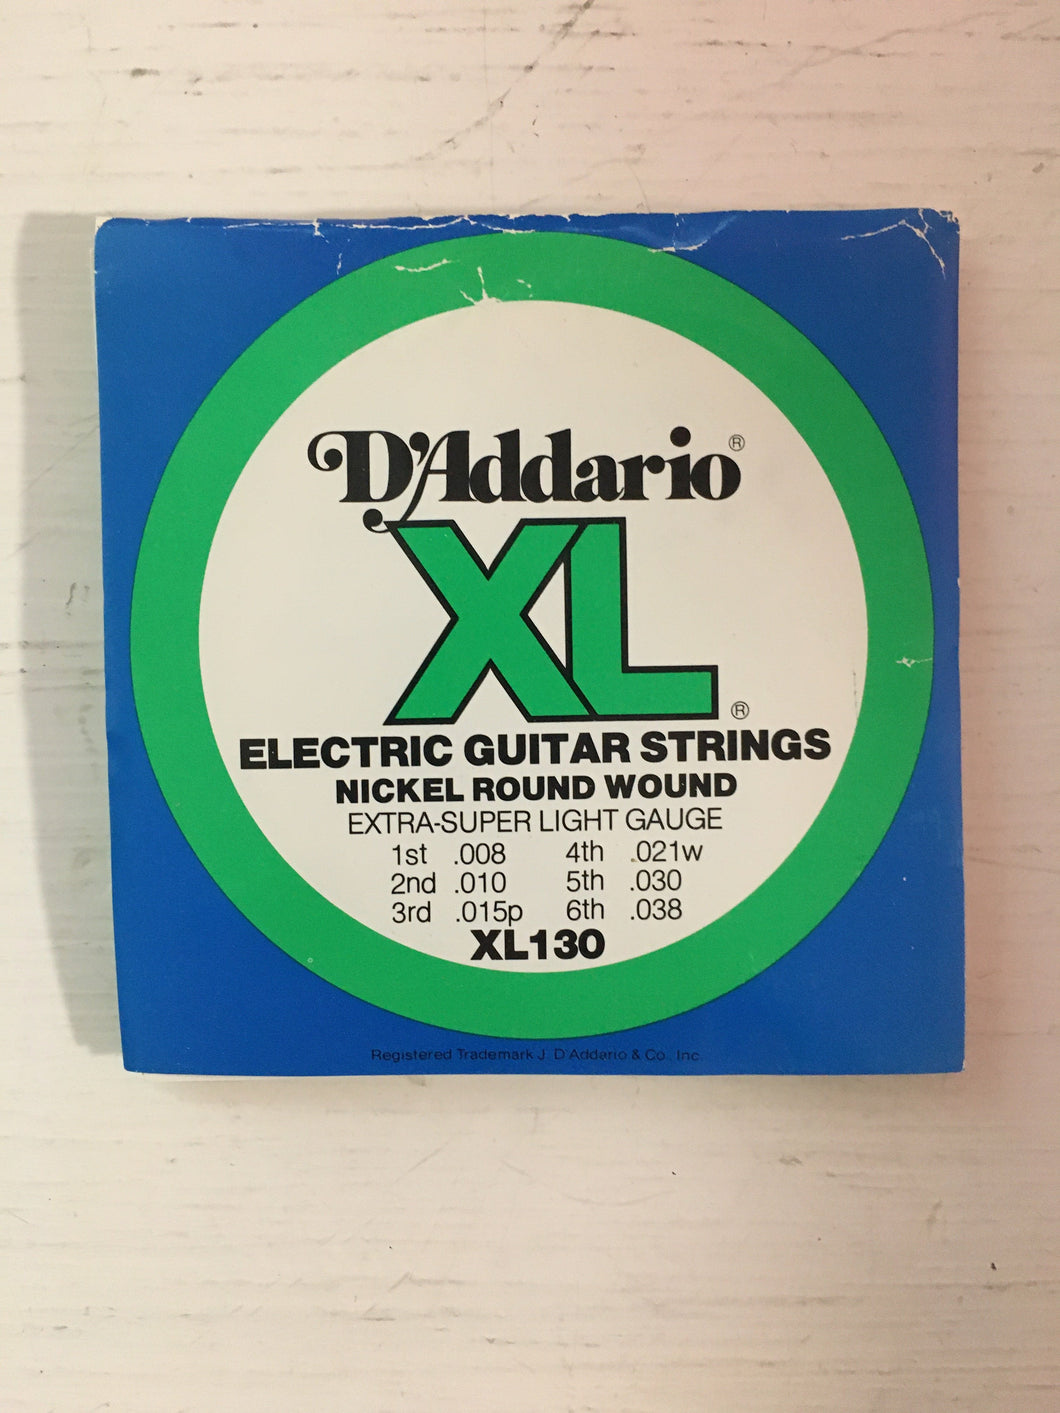 Electric Strings - D'Addario XL130 (Low E, A, D, G)